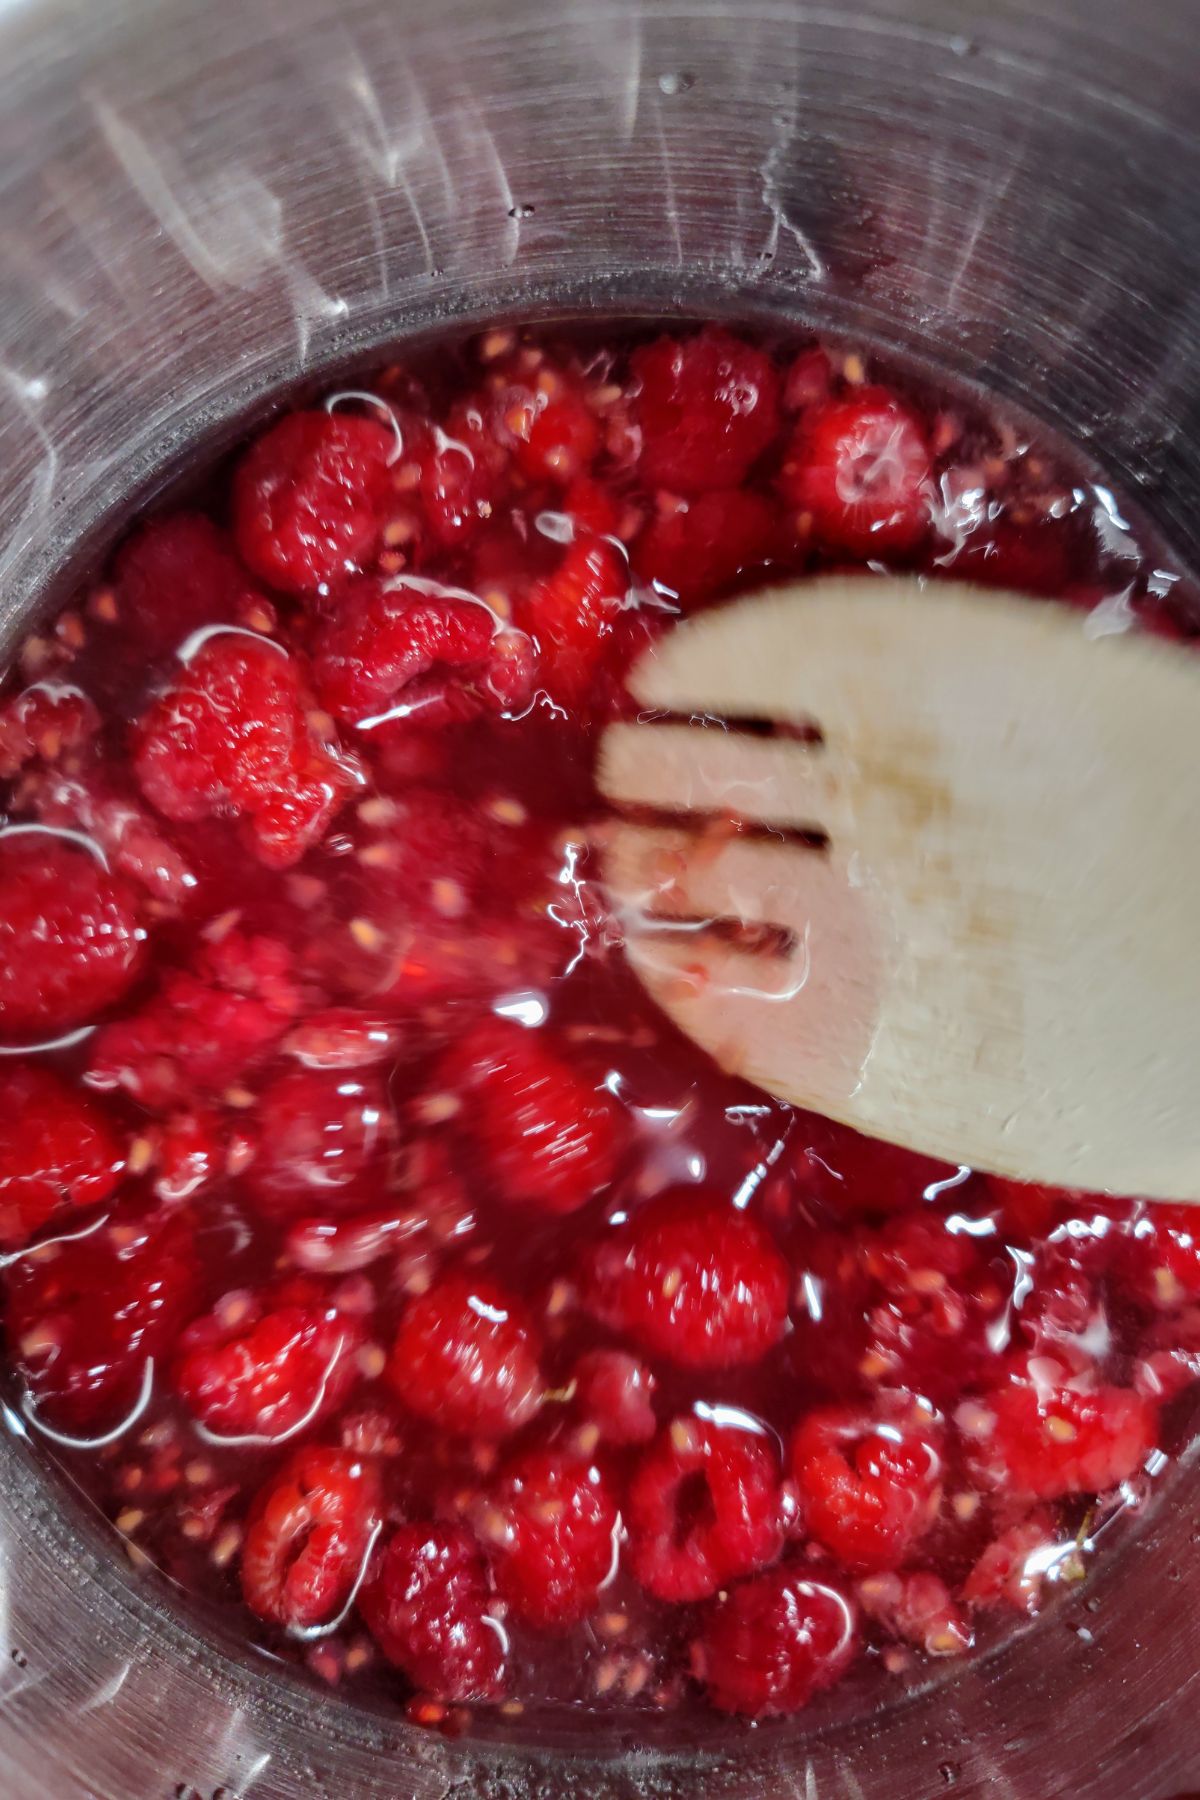 Stirring raspberries as they simmer.